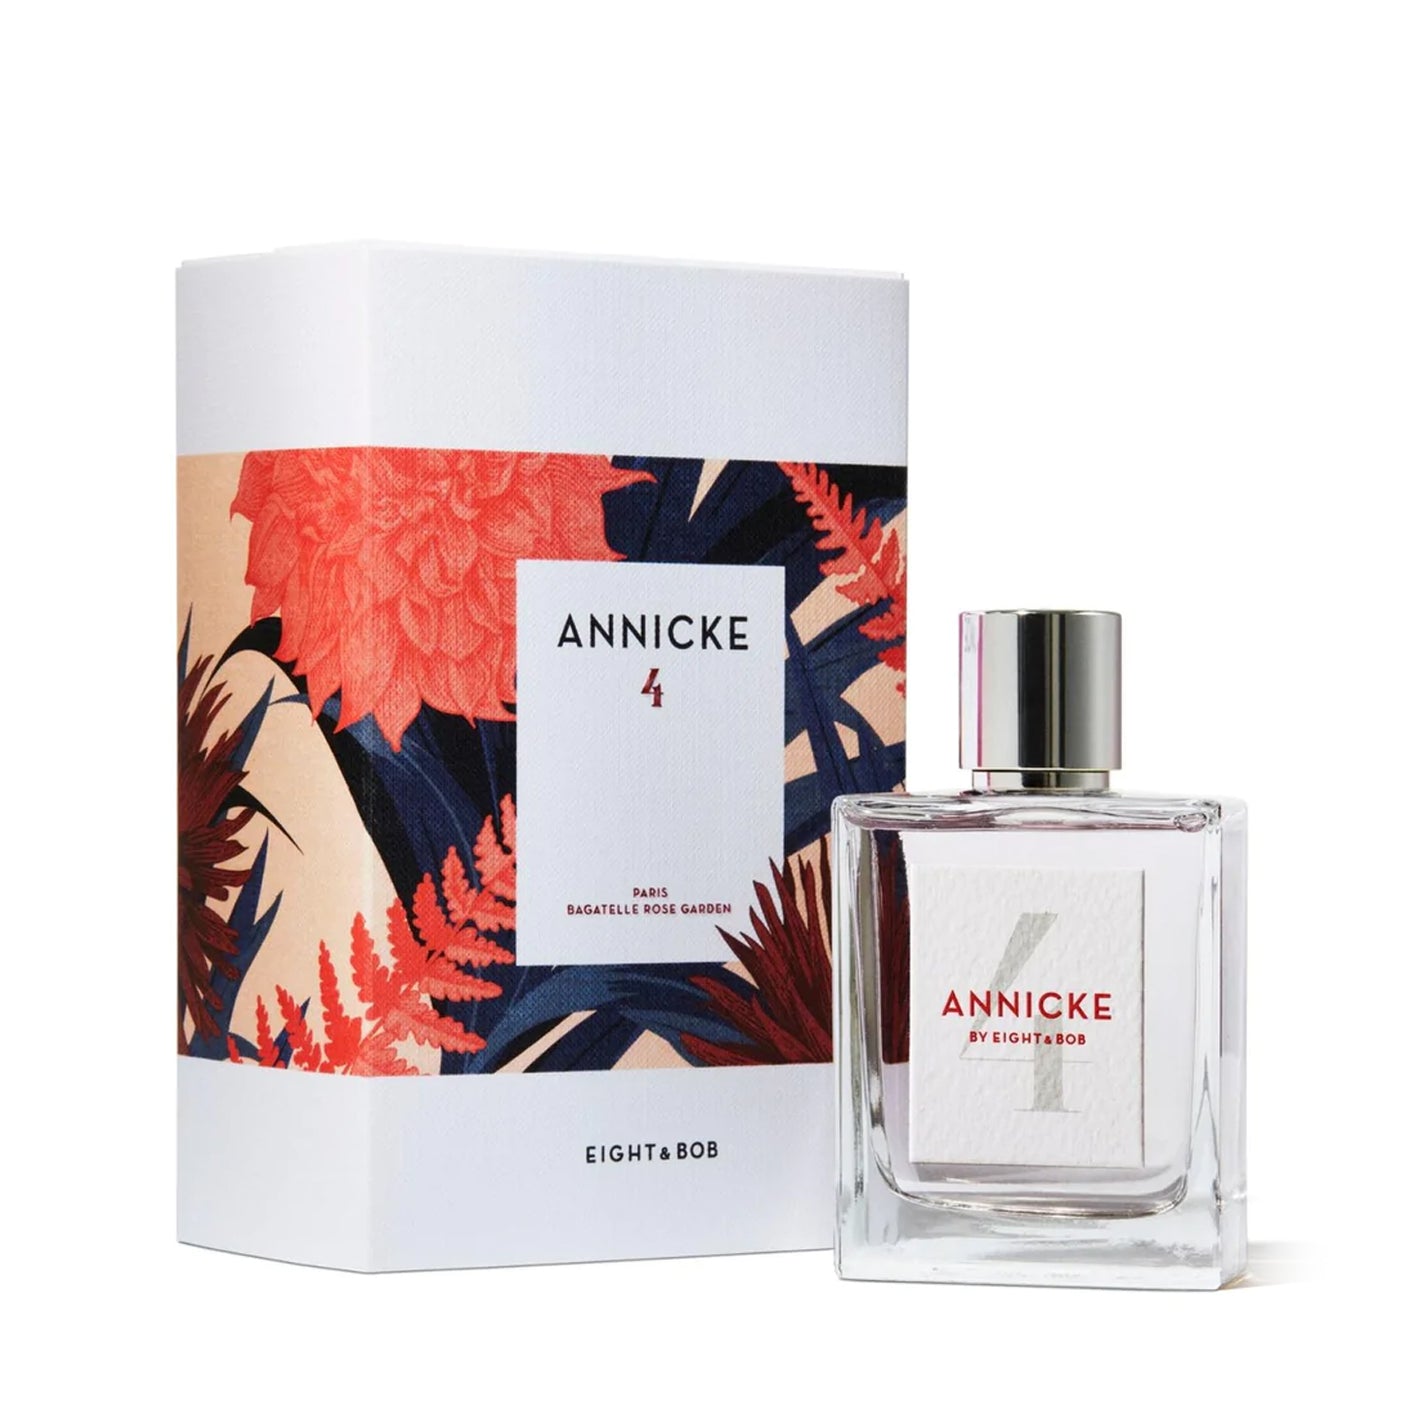 Eight & Bob Annicke #4 Eau de Parfum - 100ml